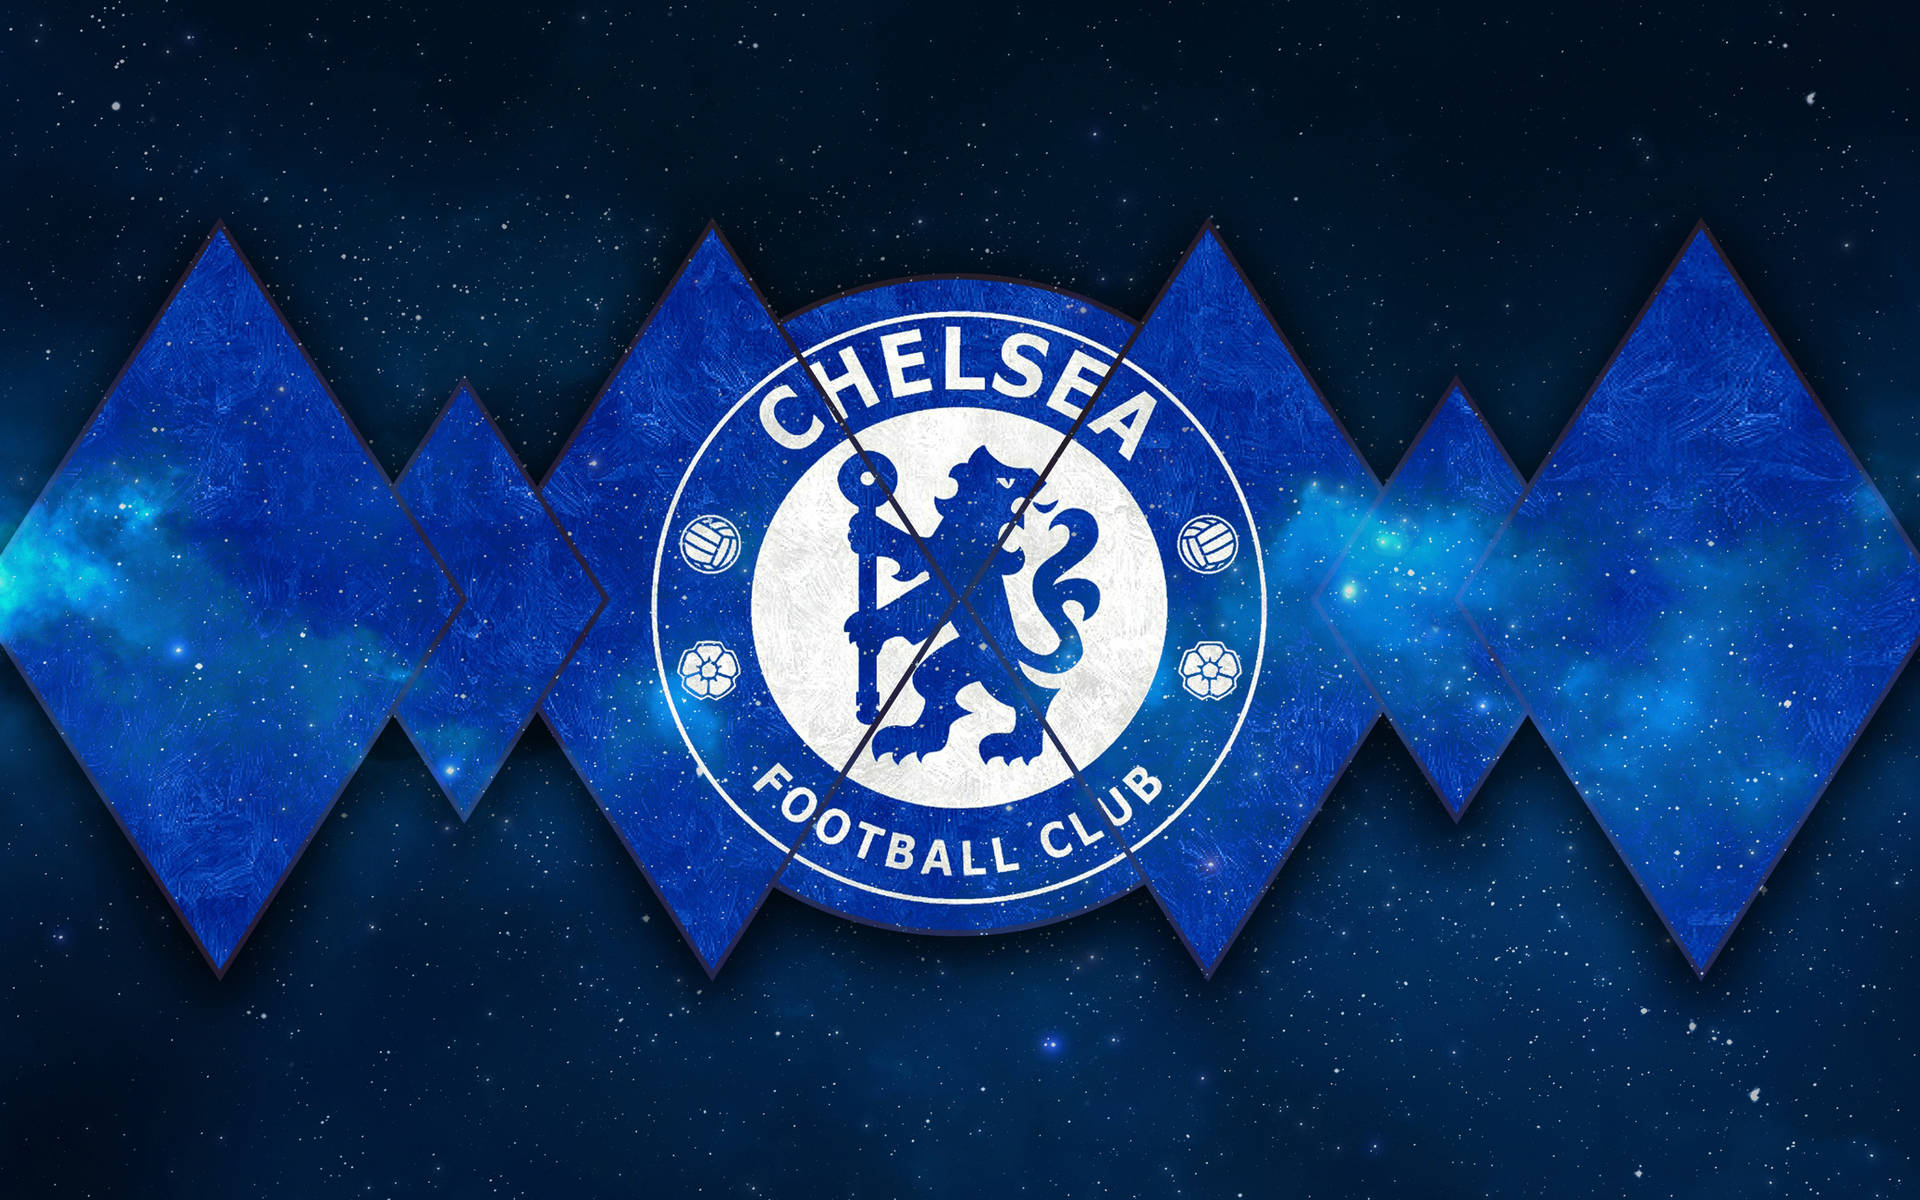 Chelsea Fc Logo In Diamond Patterns Background